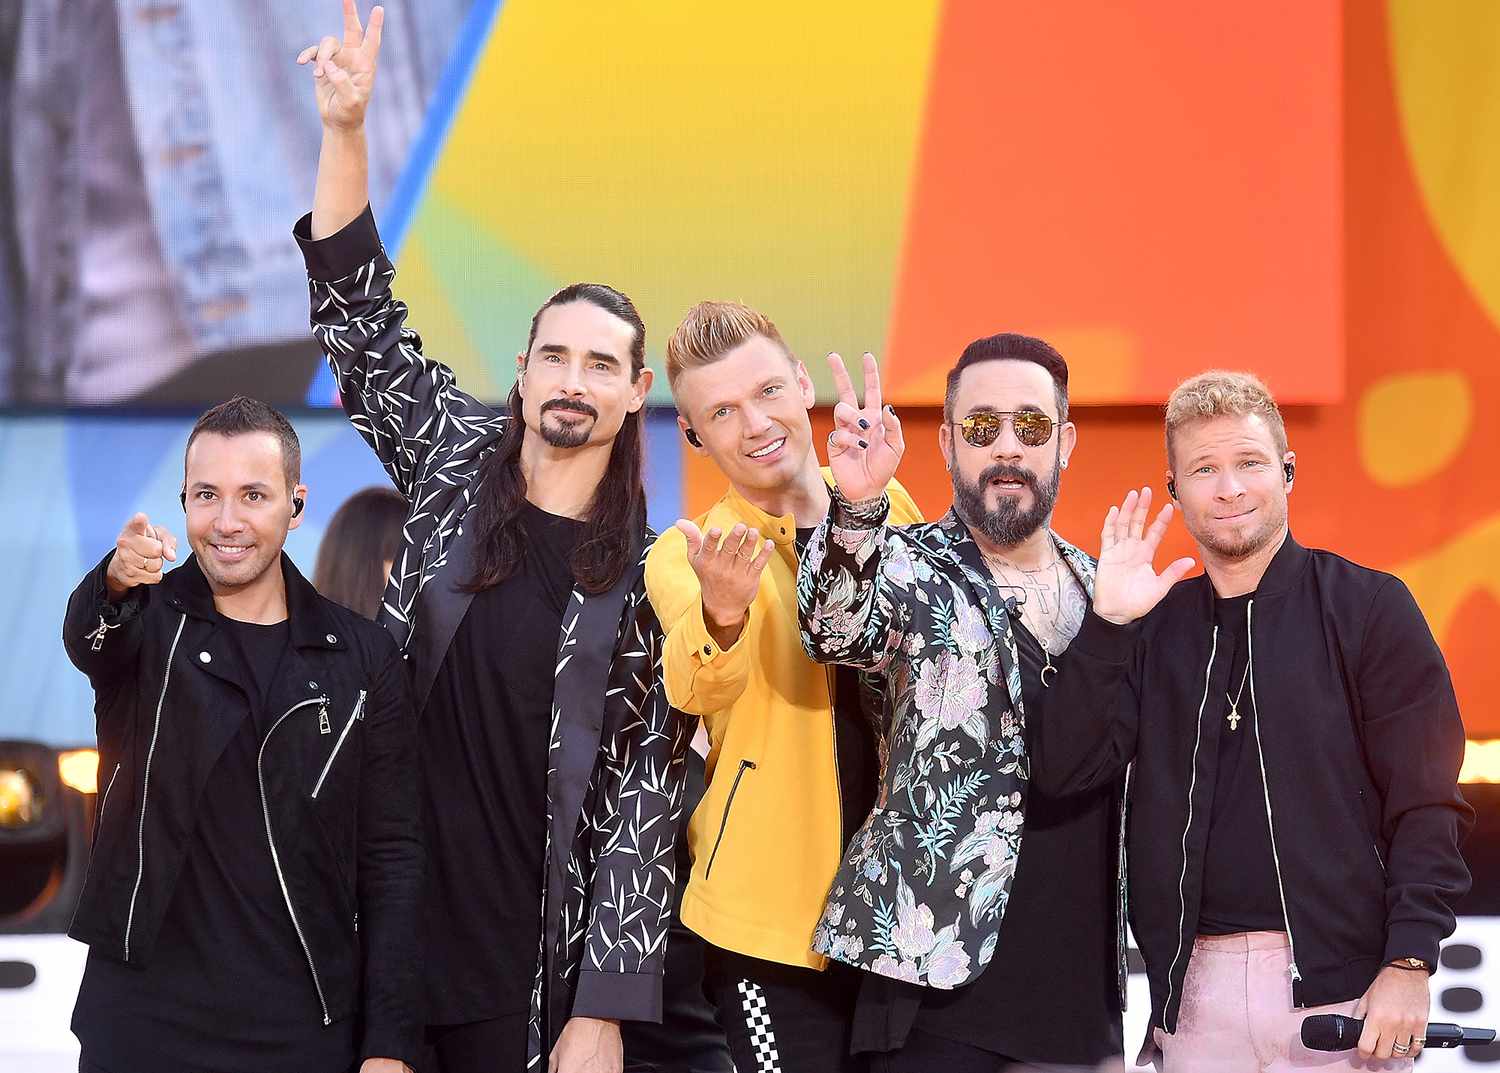 Backstreet Boys Perform On ABC's "Good Morning America"